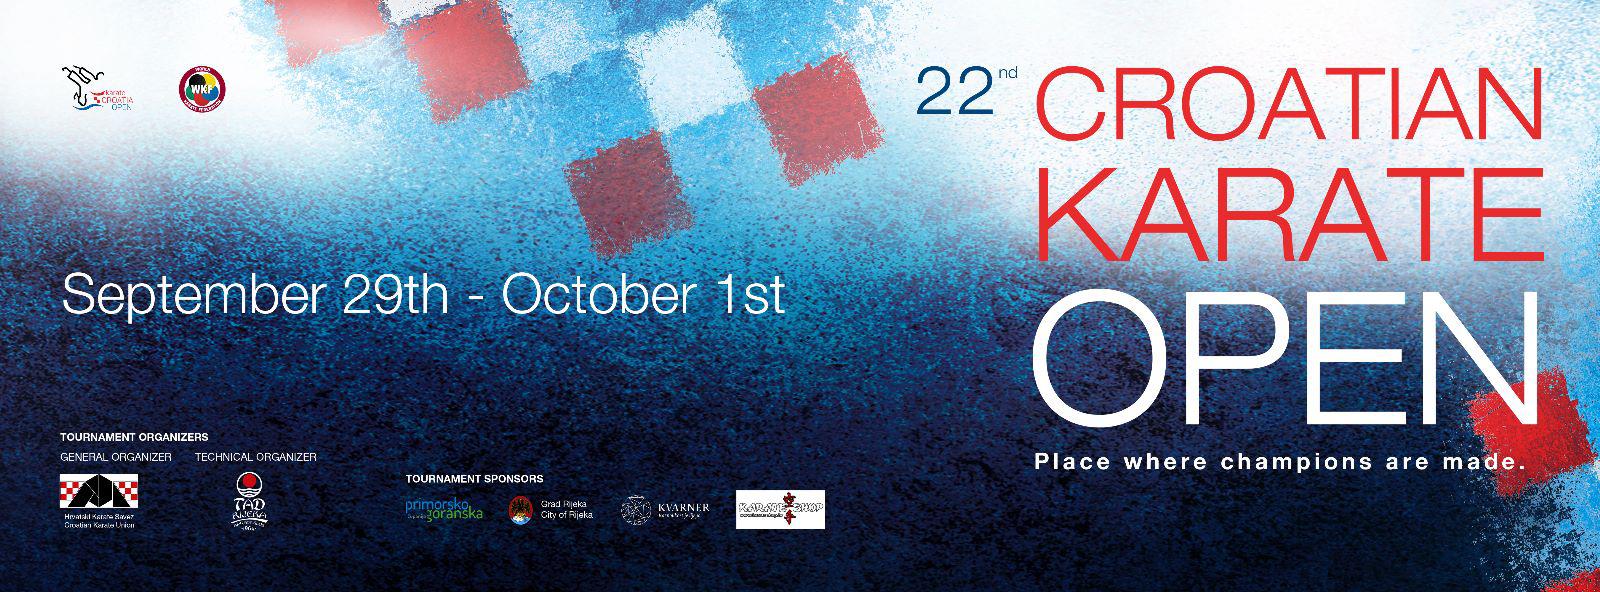 SET Online Croatia 22nd Croatian Karate Open